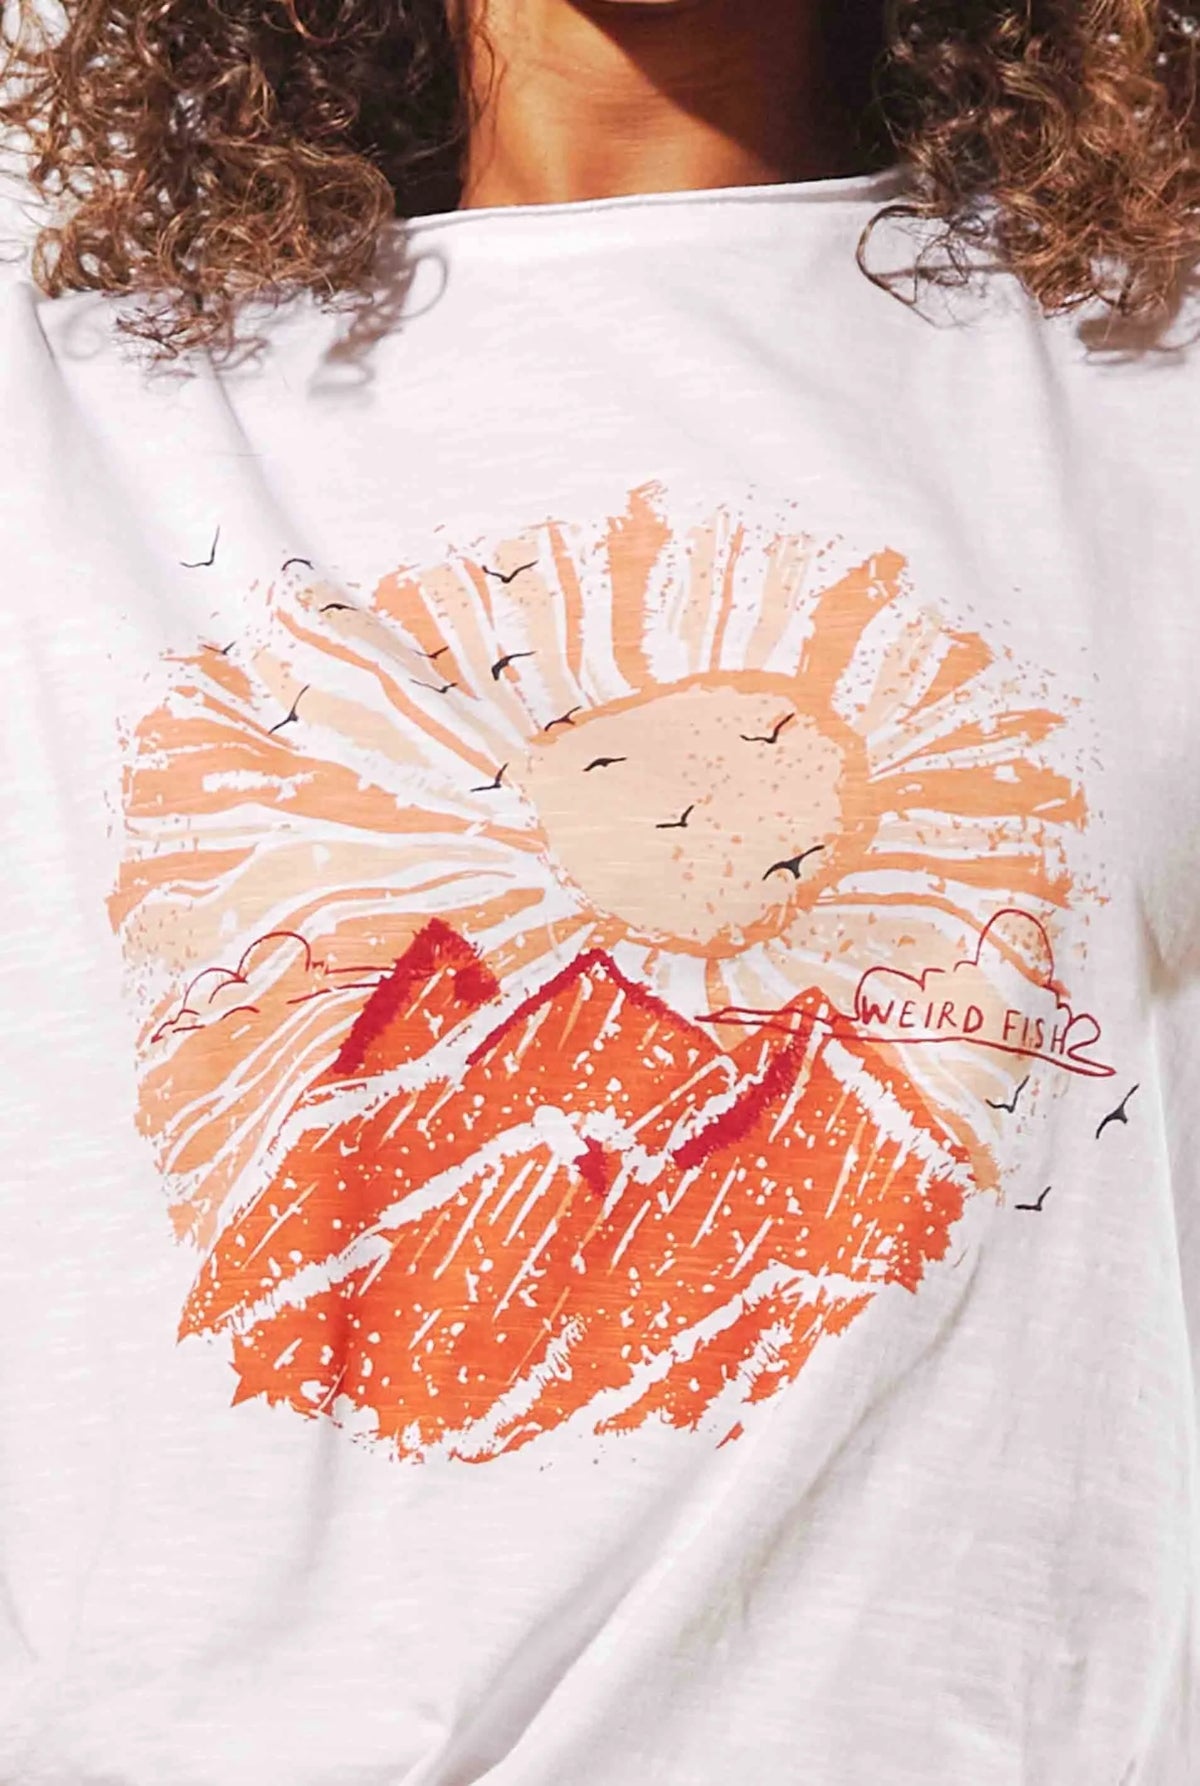 Weird Fish women's Sundown t-shirt in White with an orange sun and landscape print.